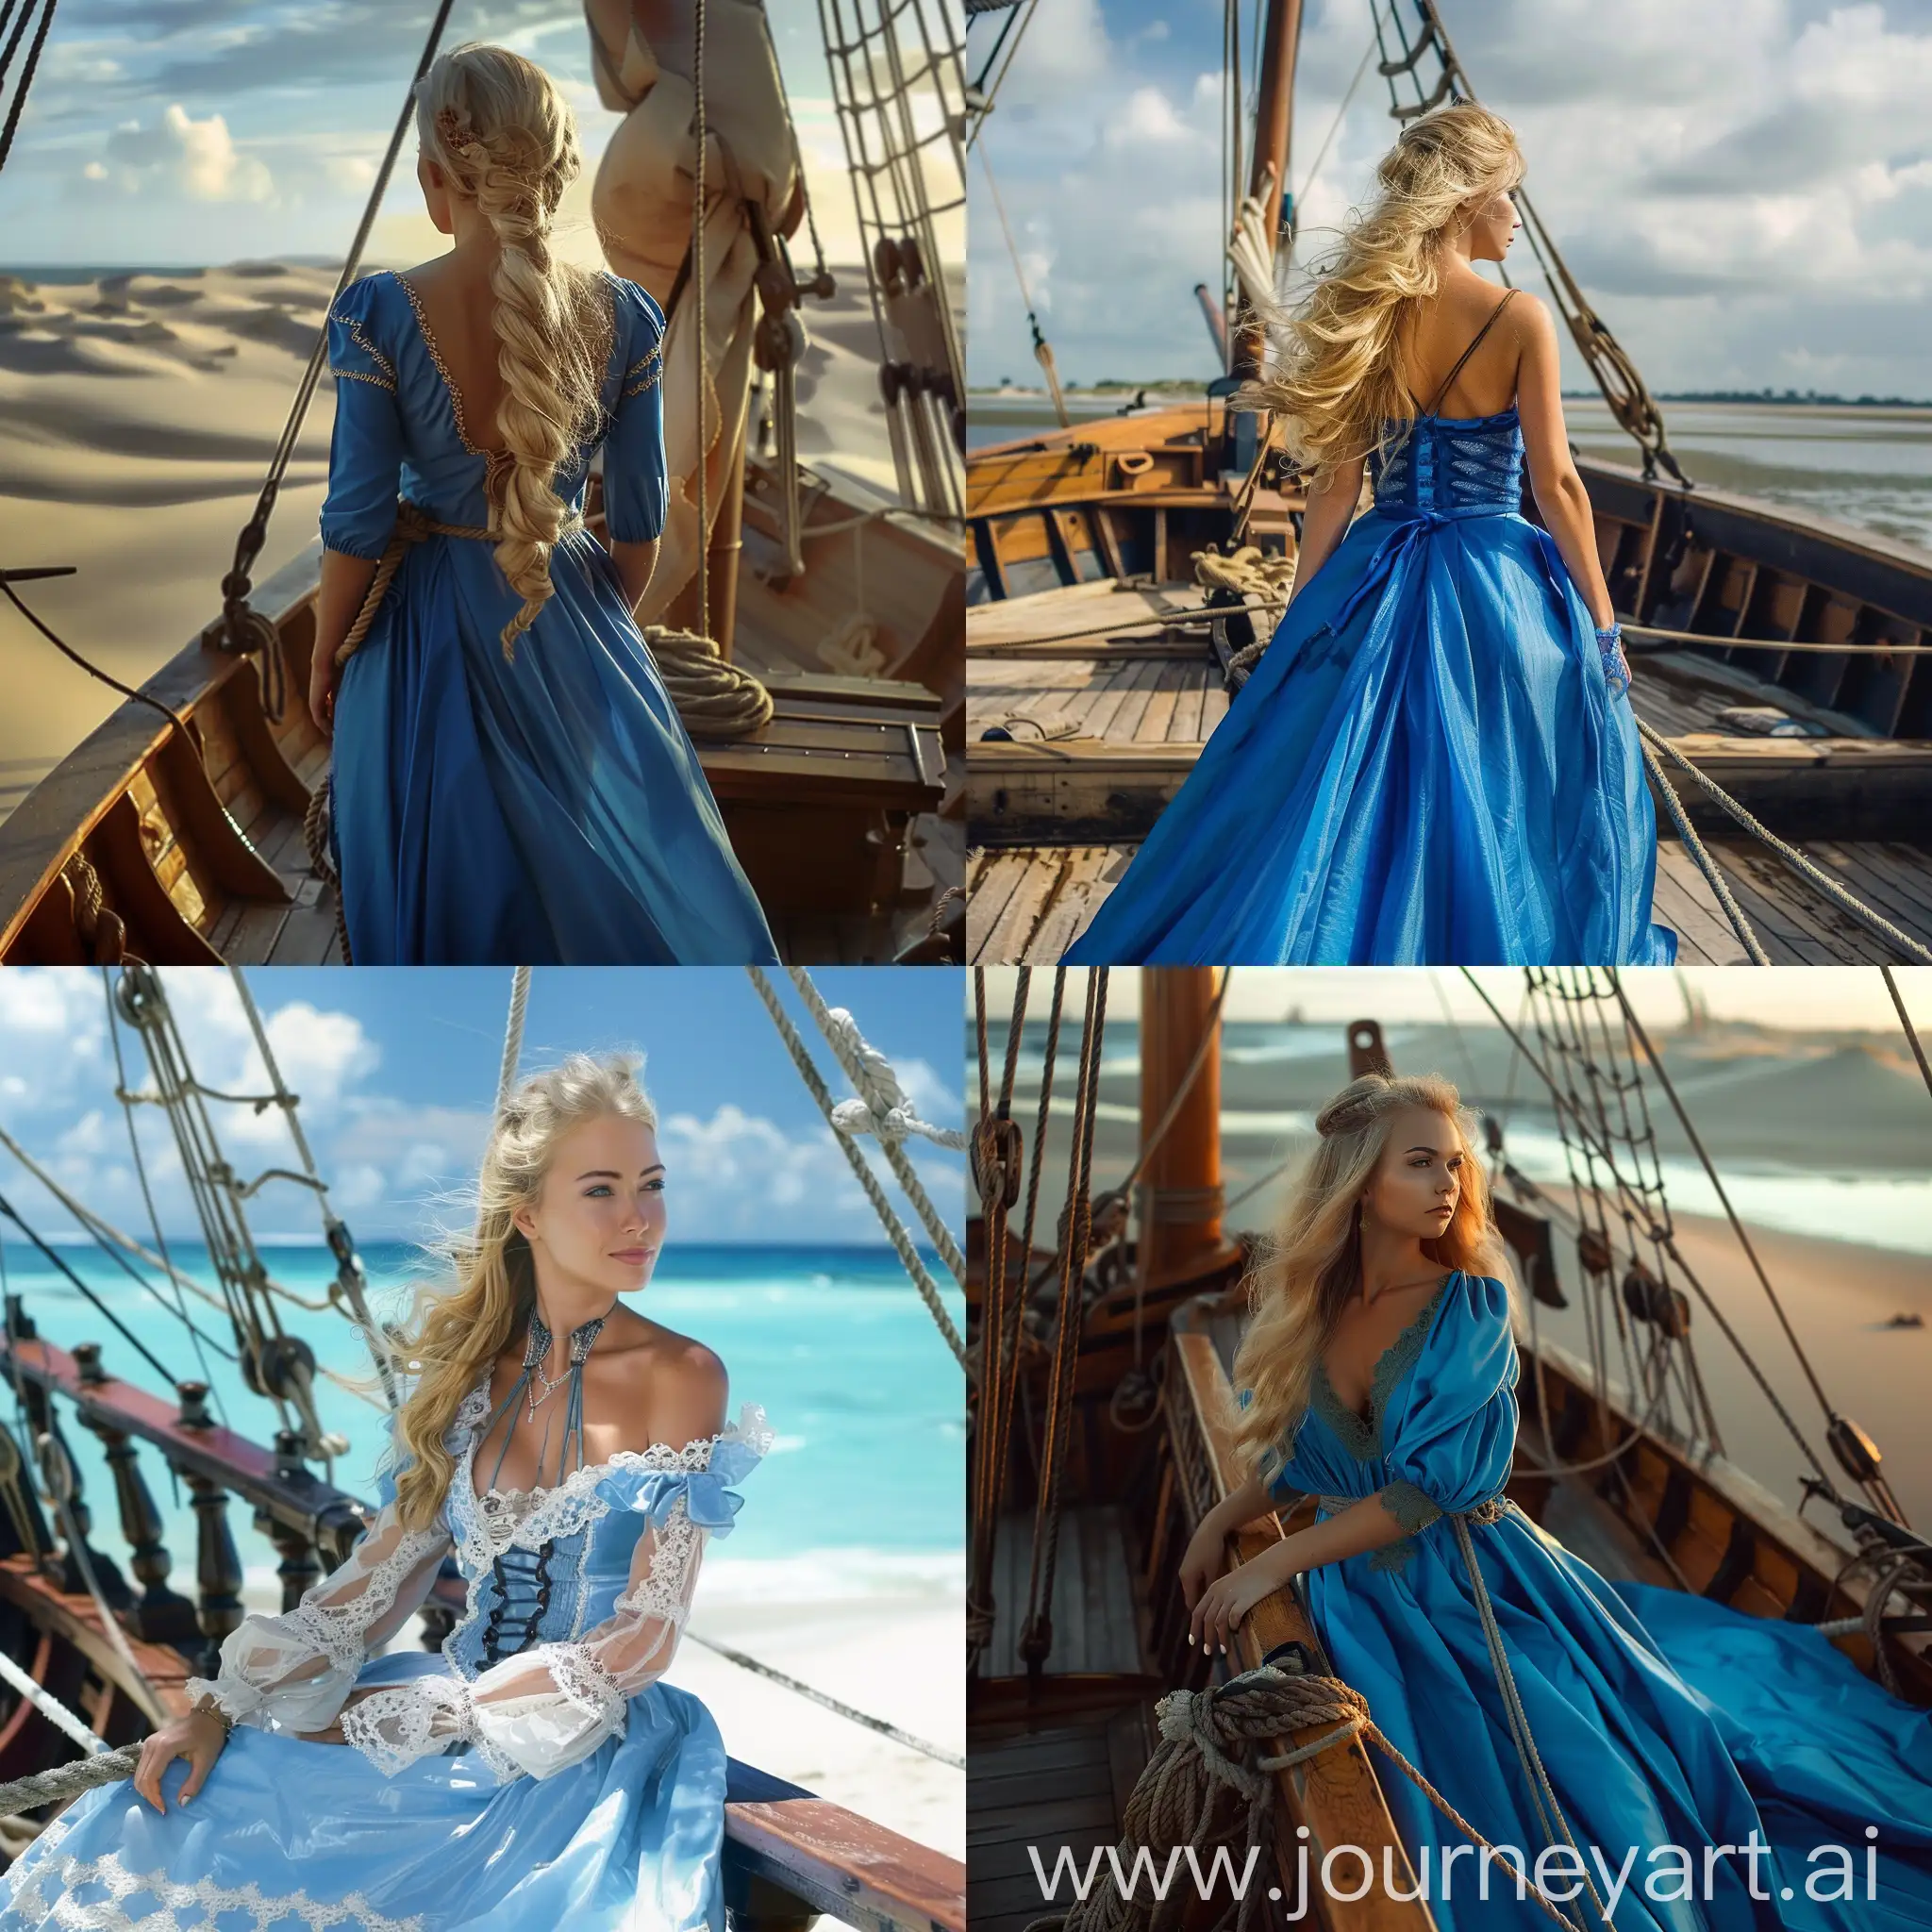 Elegant-Blonde-in-17th-Century-Blue-Dress-on-Ship-near-Stunning-Sand-Island